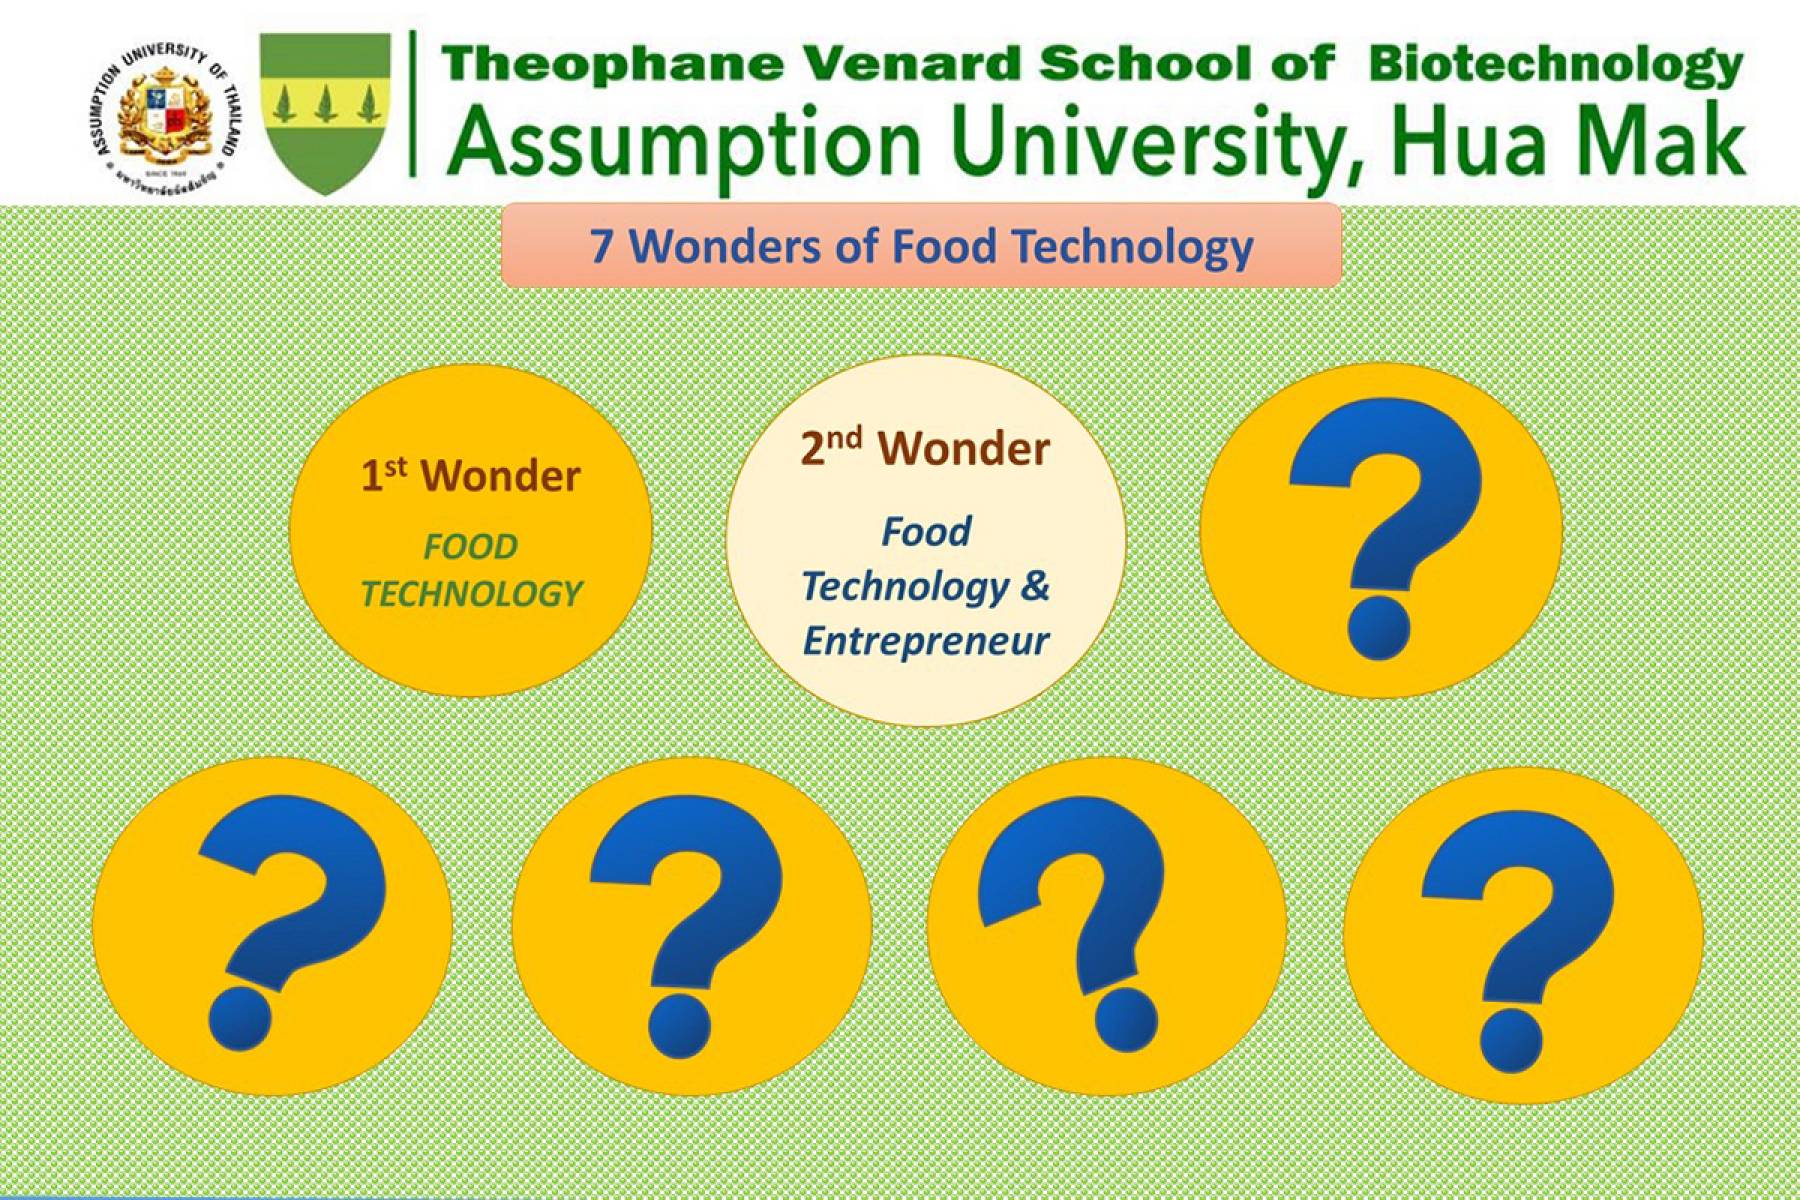 2nd Wonder: Food Technology and Entrepreneur #Journey to Food Technologist and Entrepreneurship 